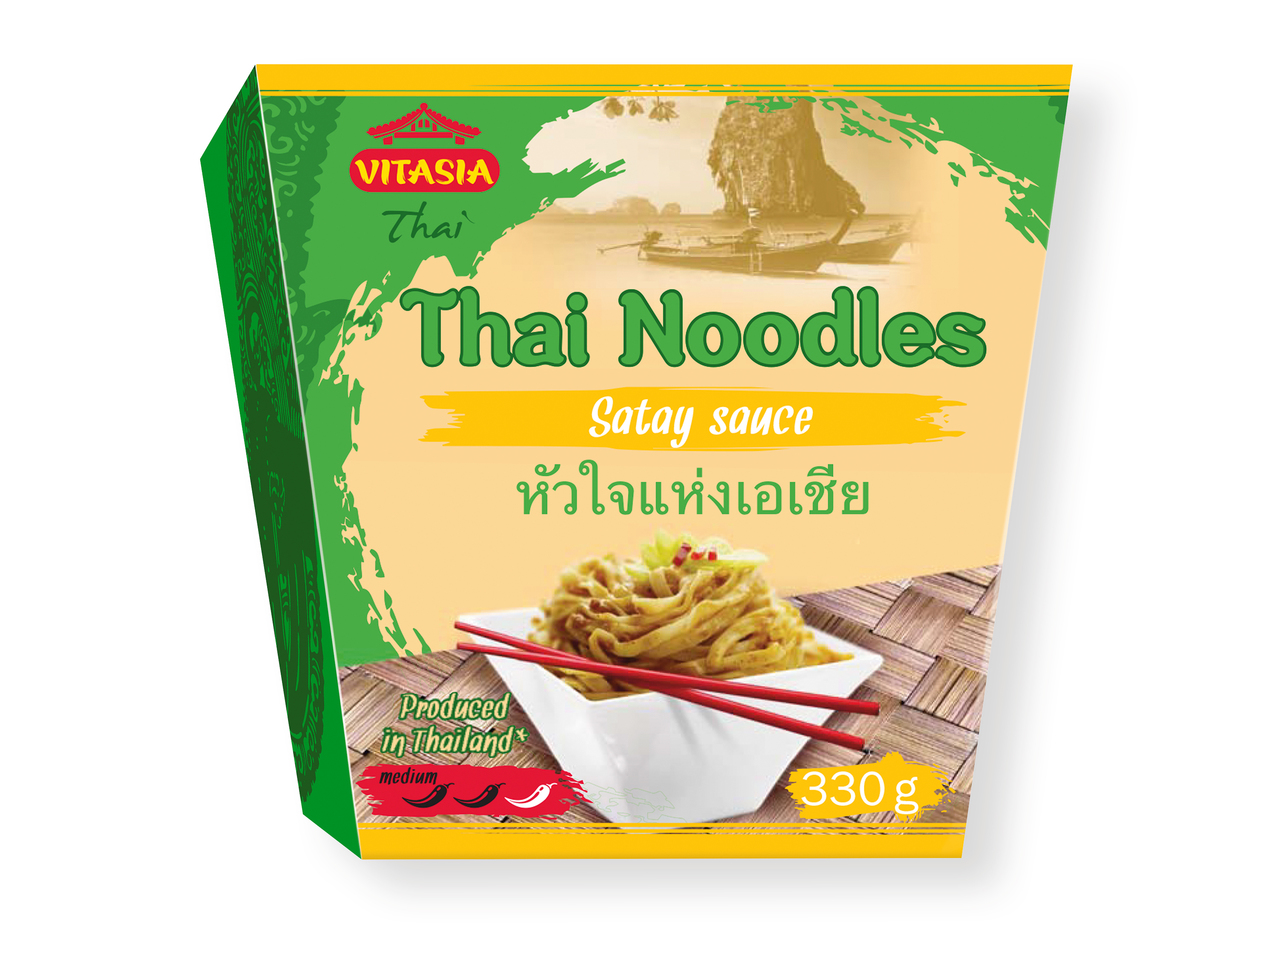 "Vitasia" Fideos tailandeses para microondas